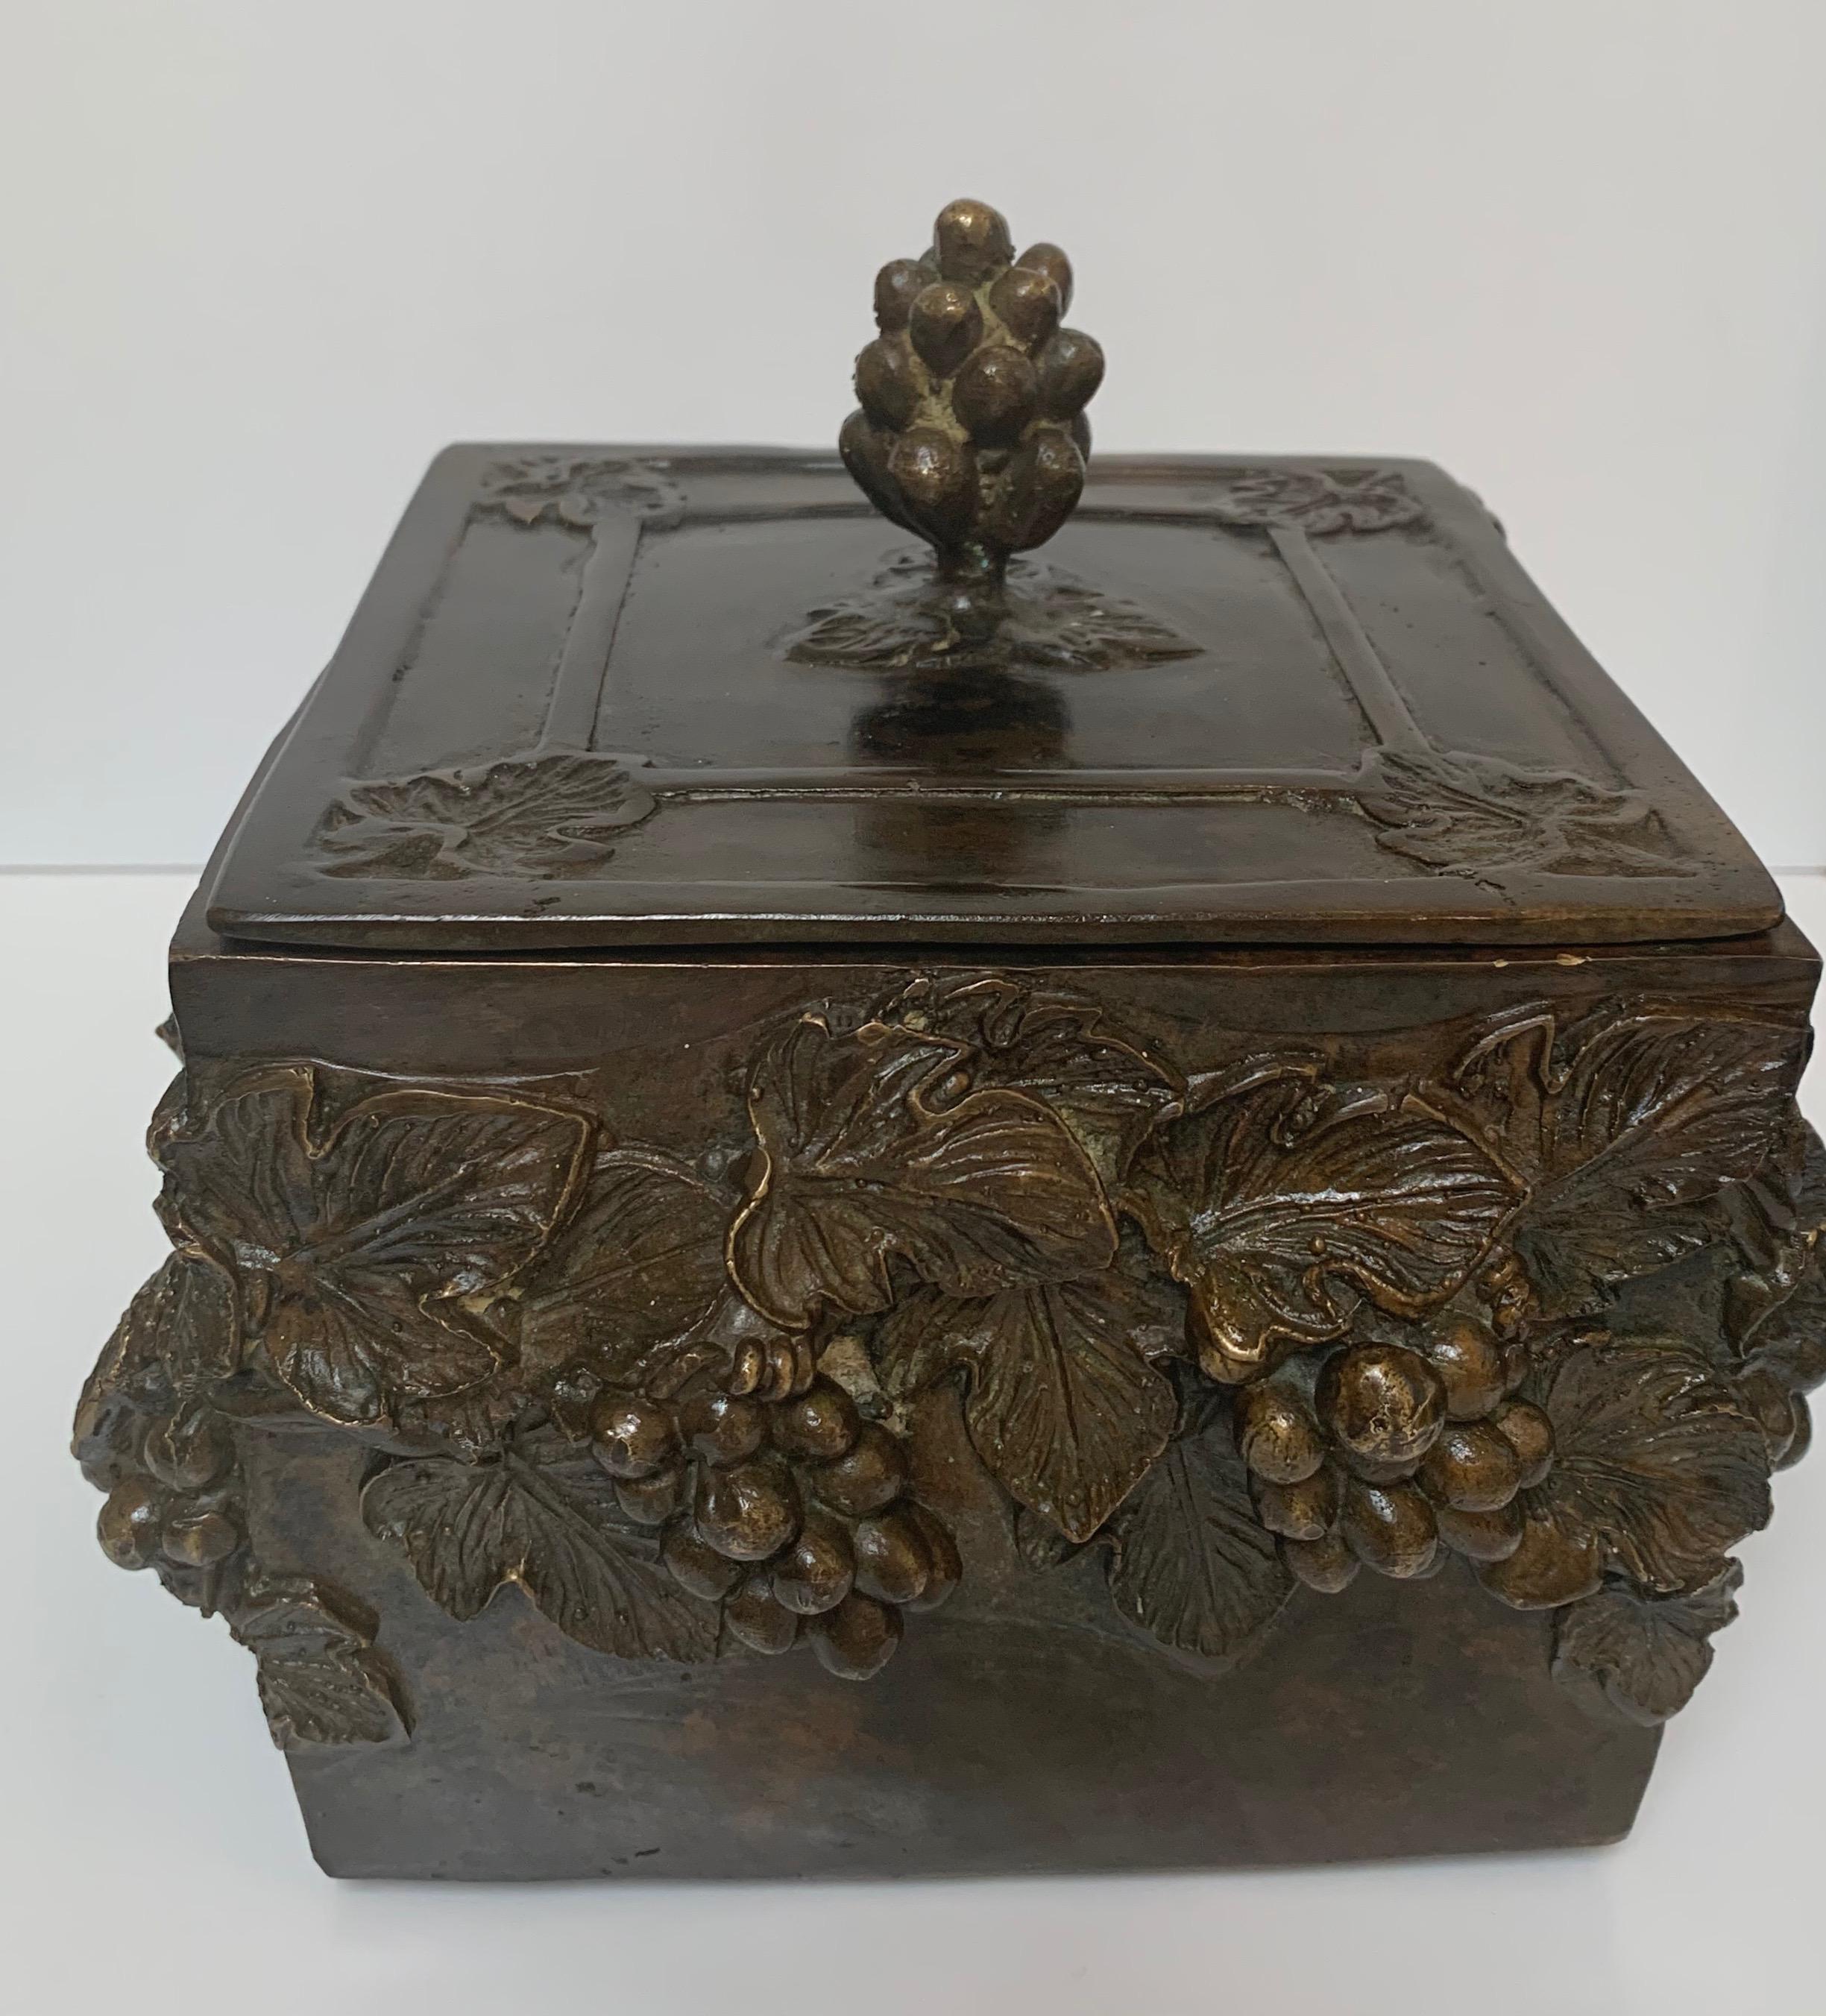 Solid bronze box by Maitland-Smith, circa 1970.